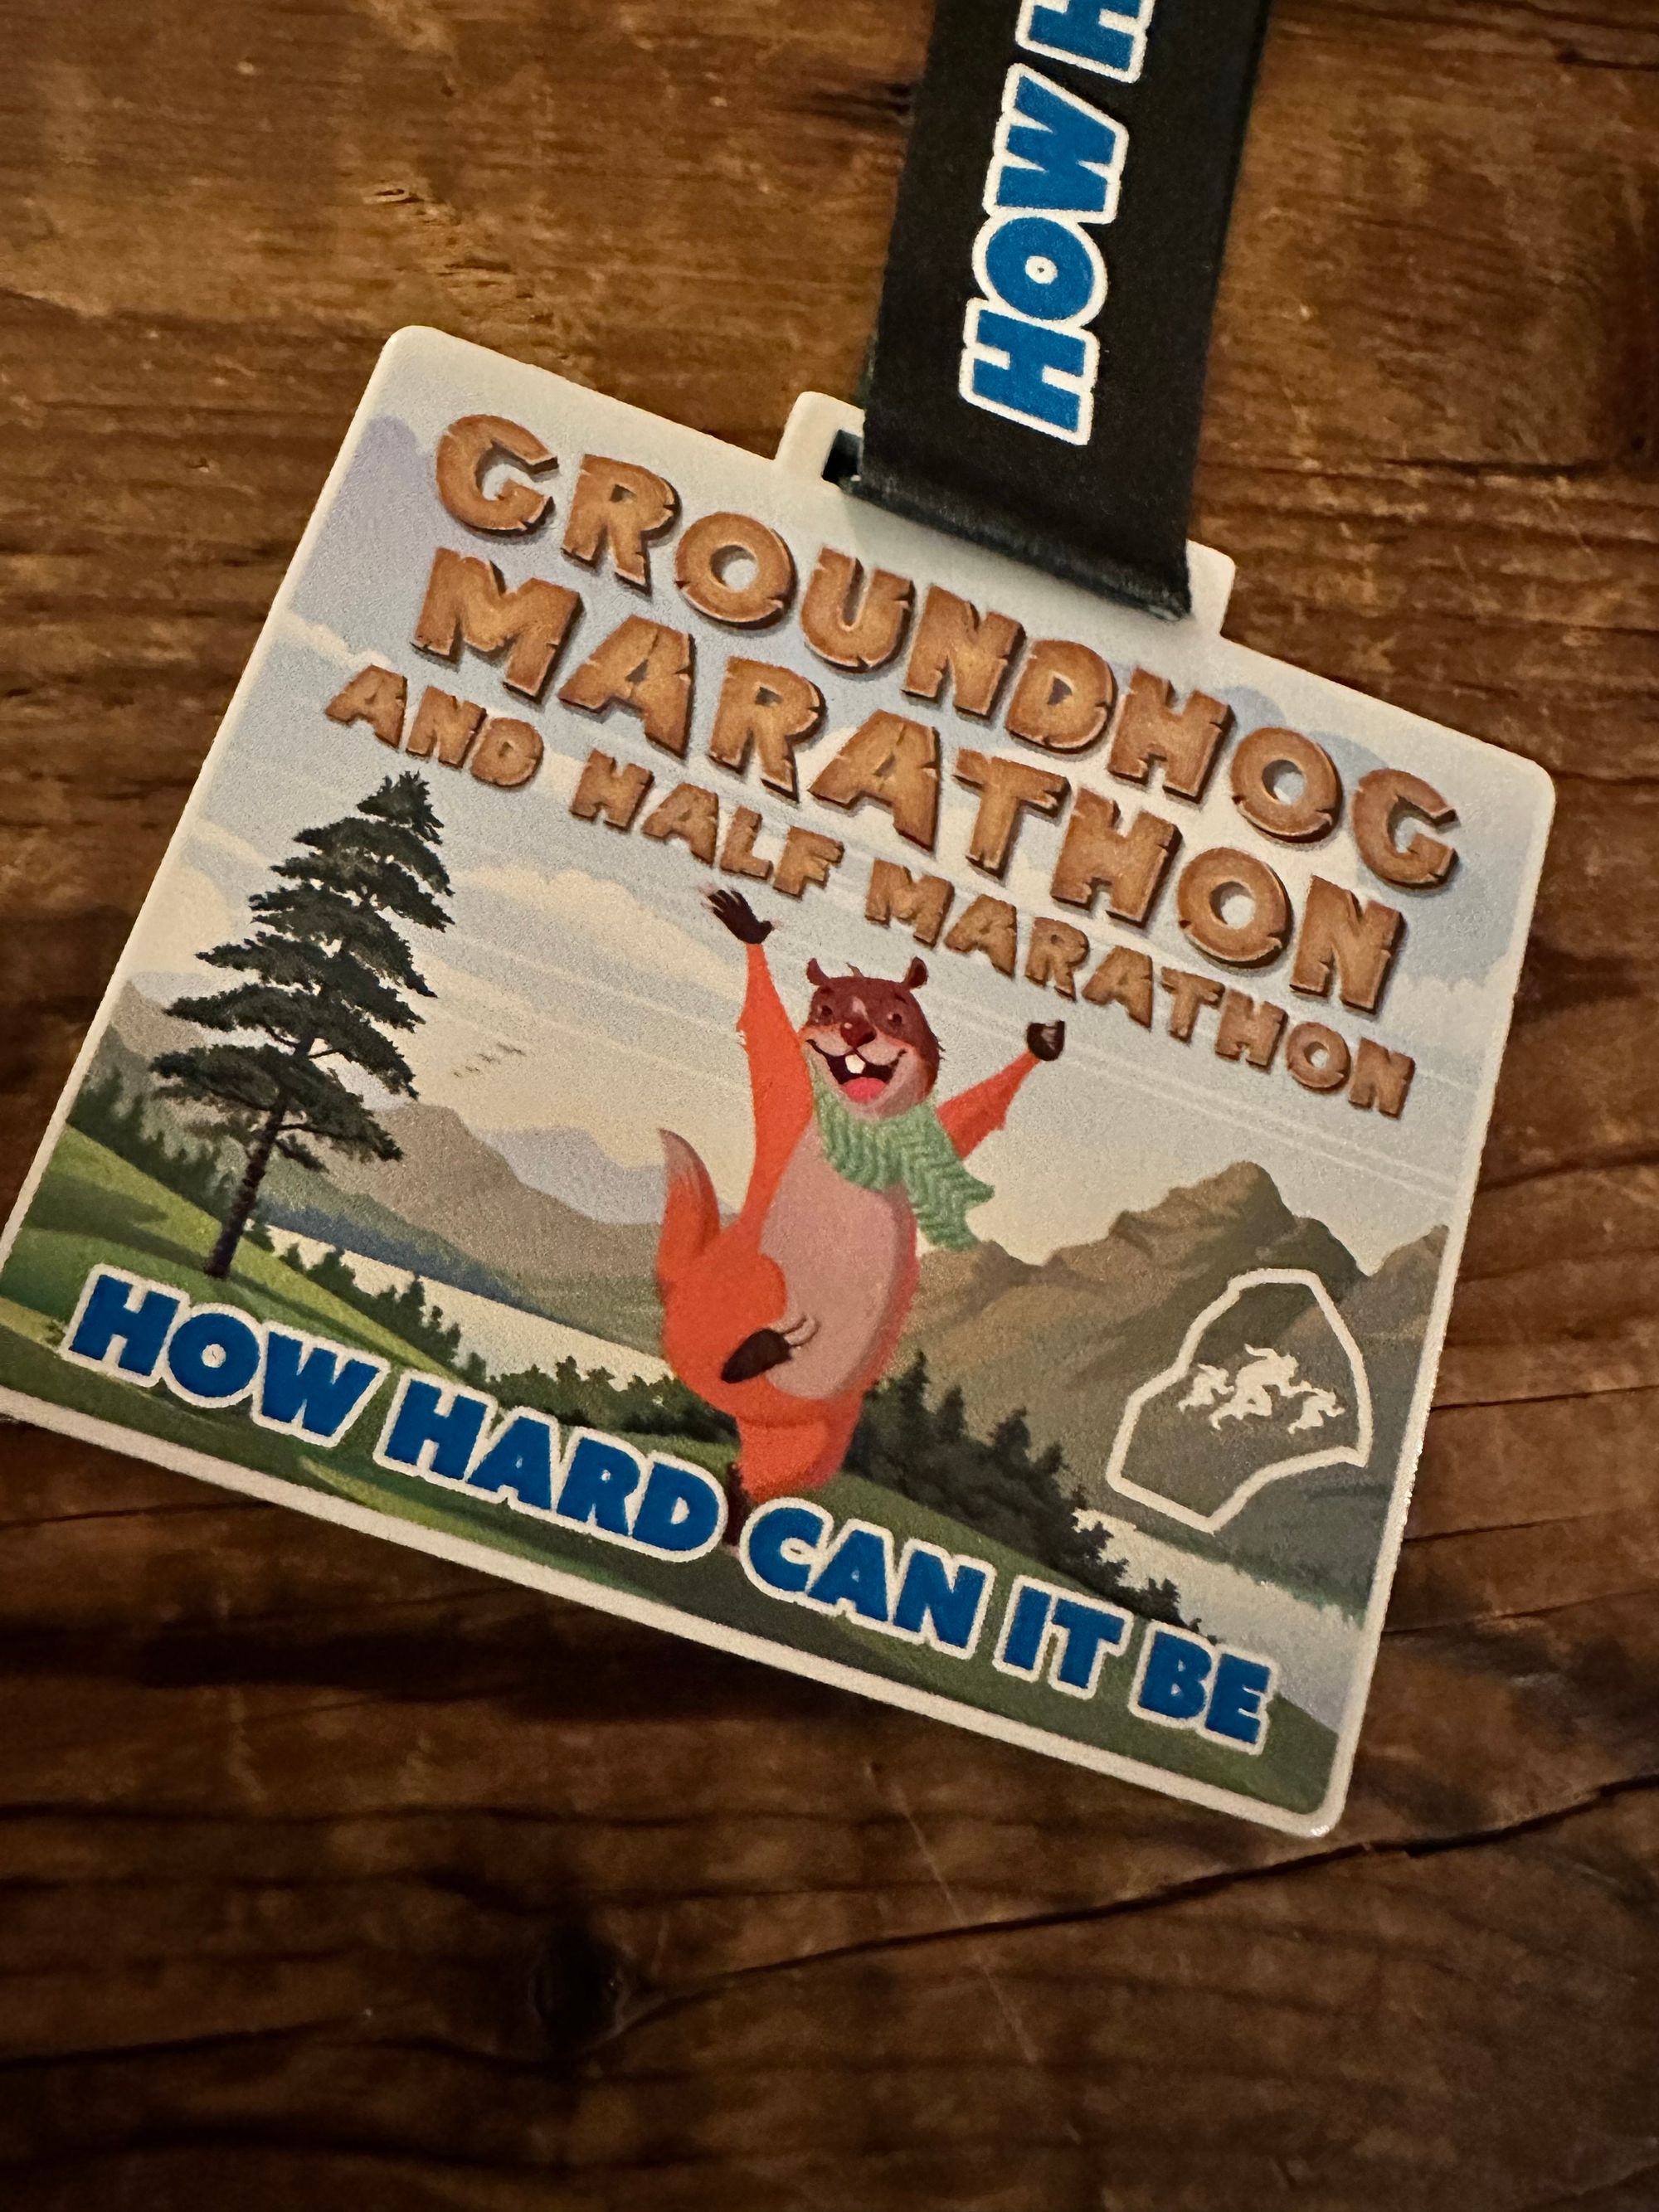 The Groundhog Marathon